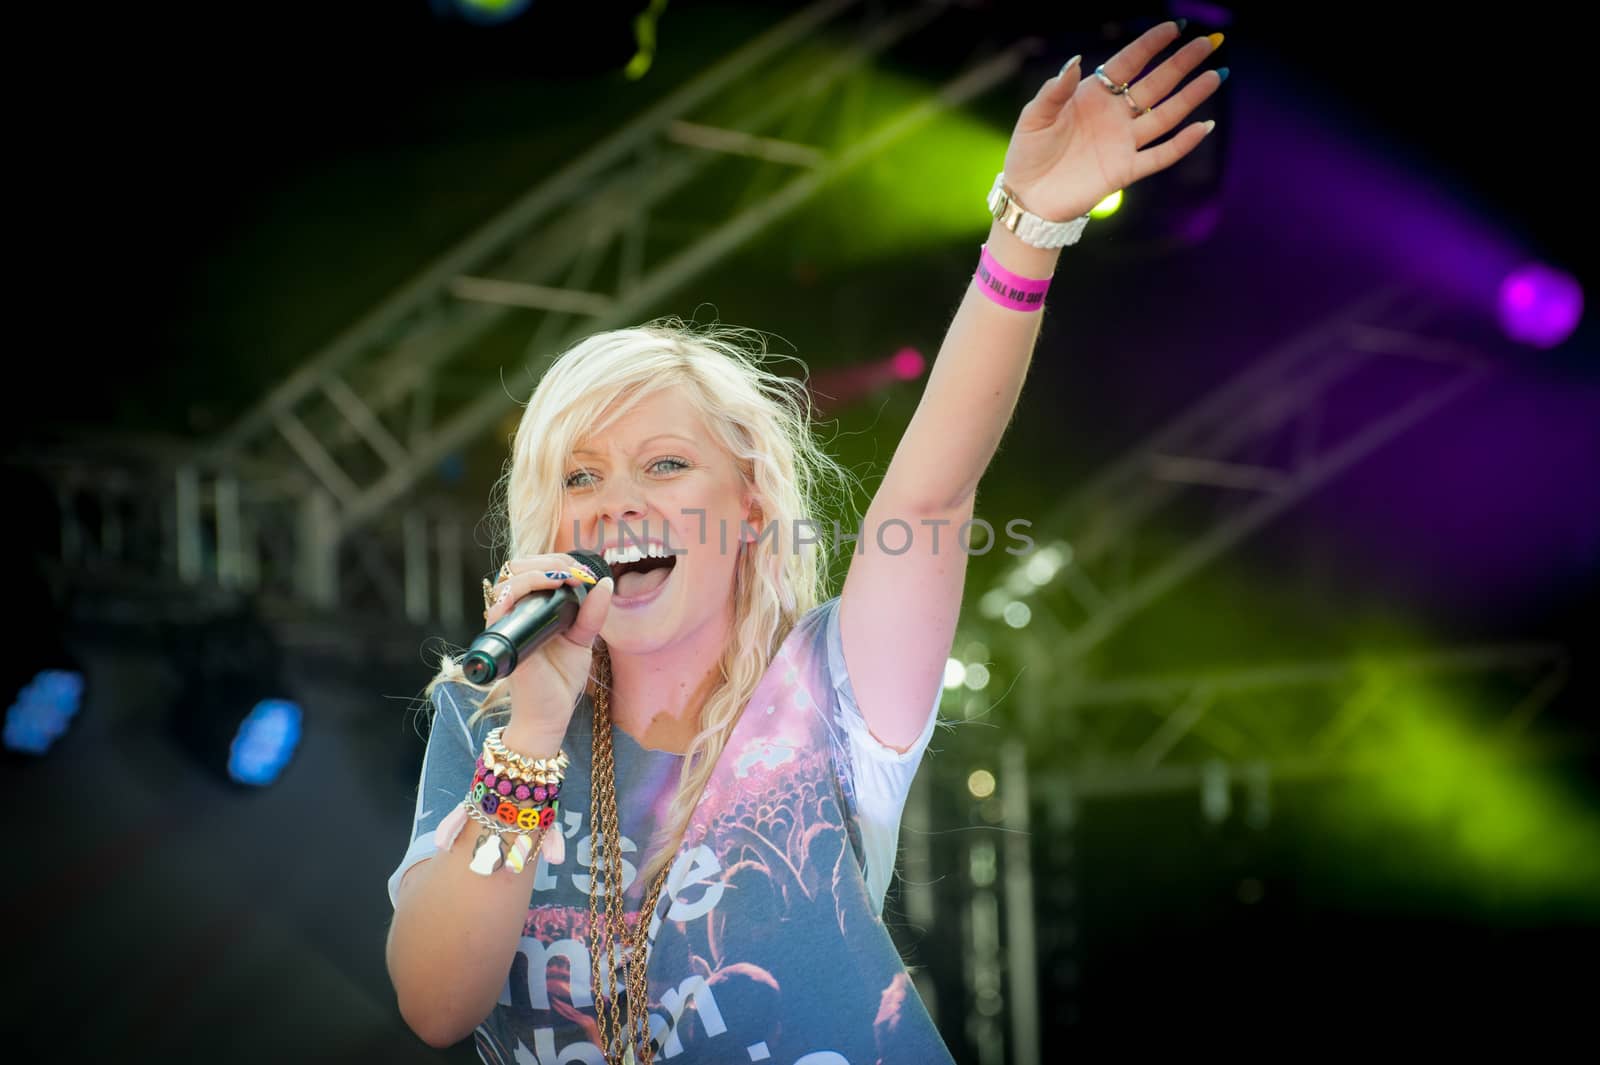 Yateley, UK - June 30, 2012: British pop star Alexa Goddard performing at the GOTG Festival in her home town of Yateley, UK